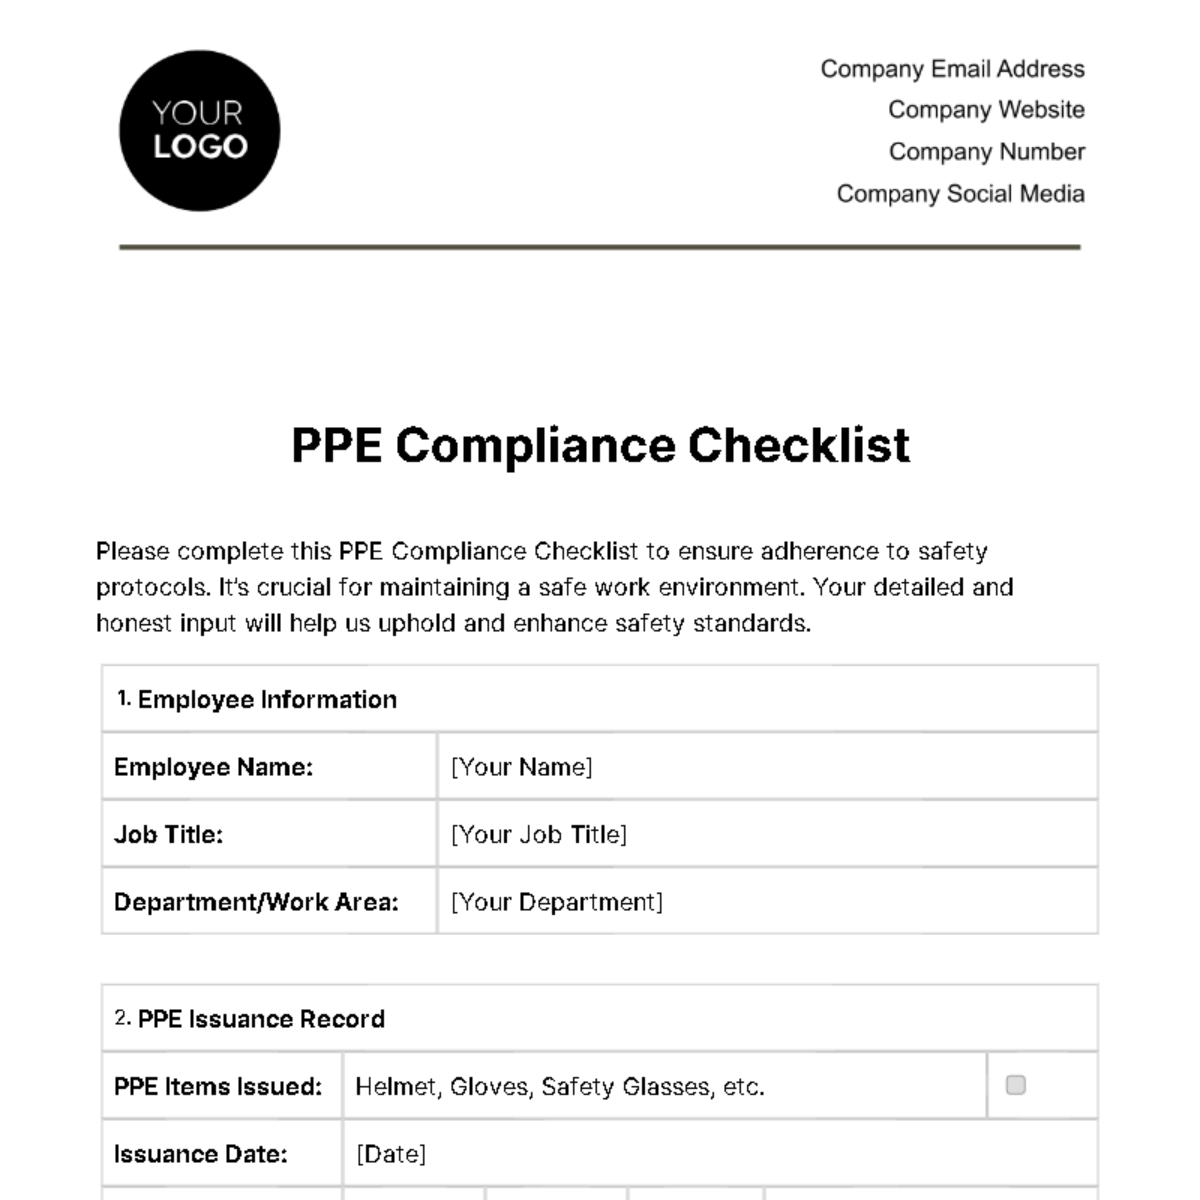 PPE Compliance Checklist Template